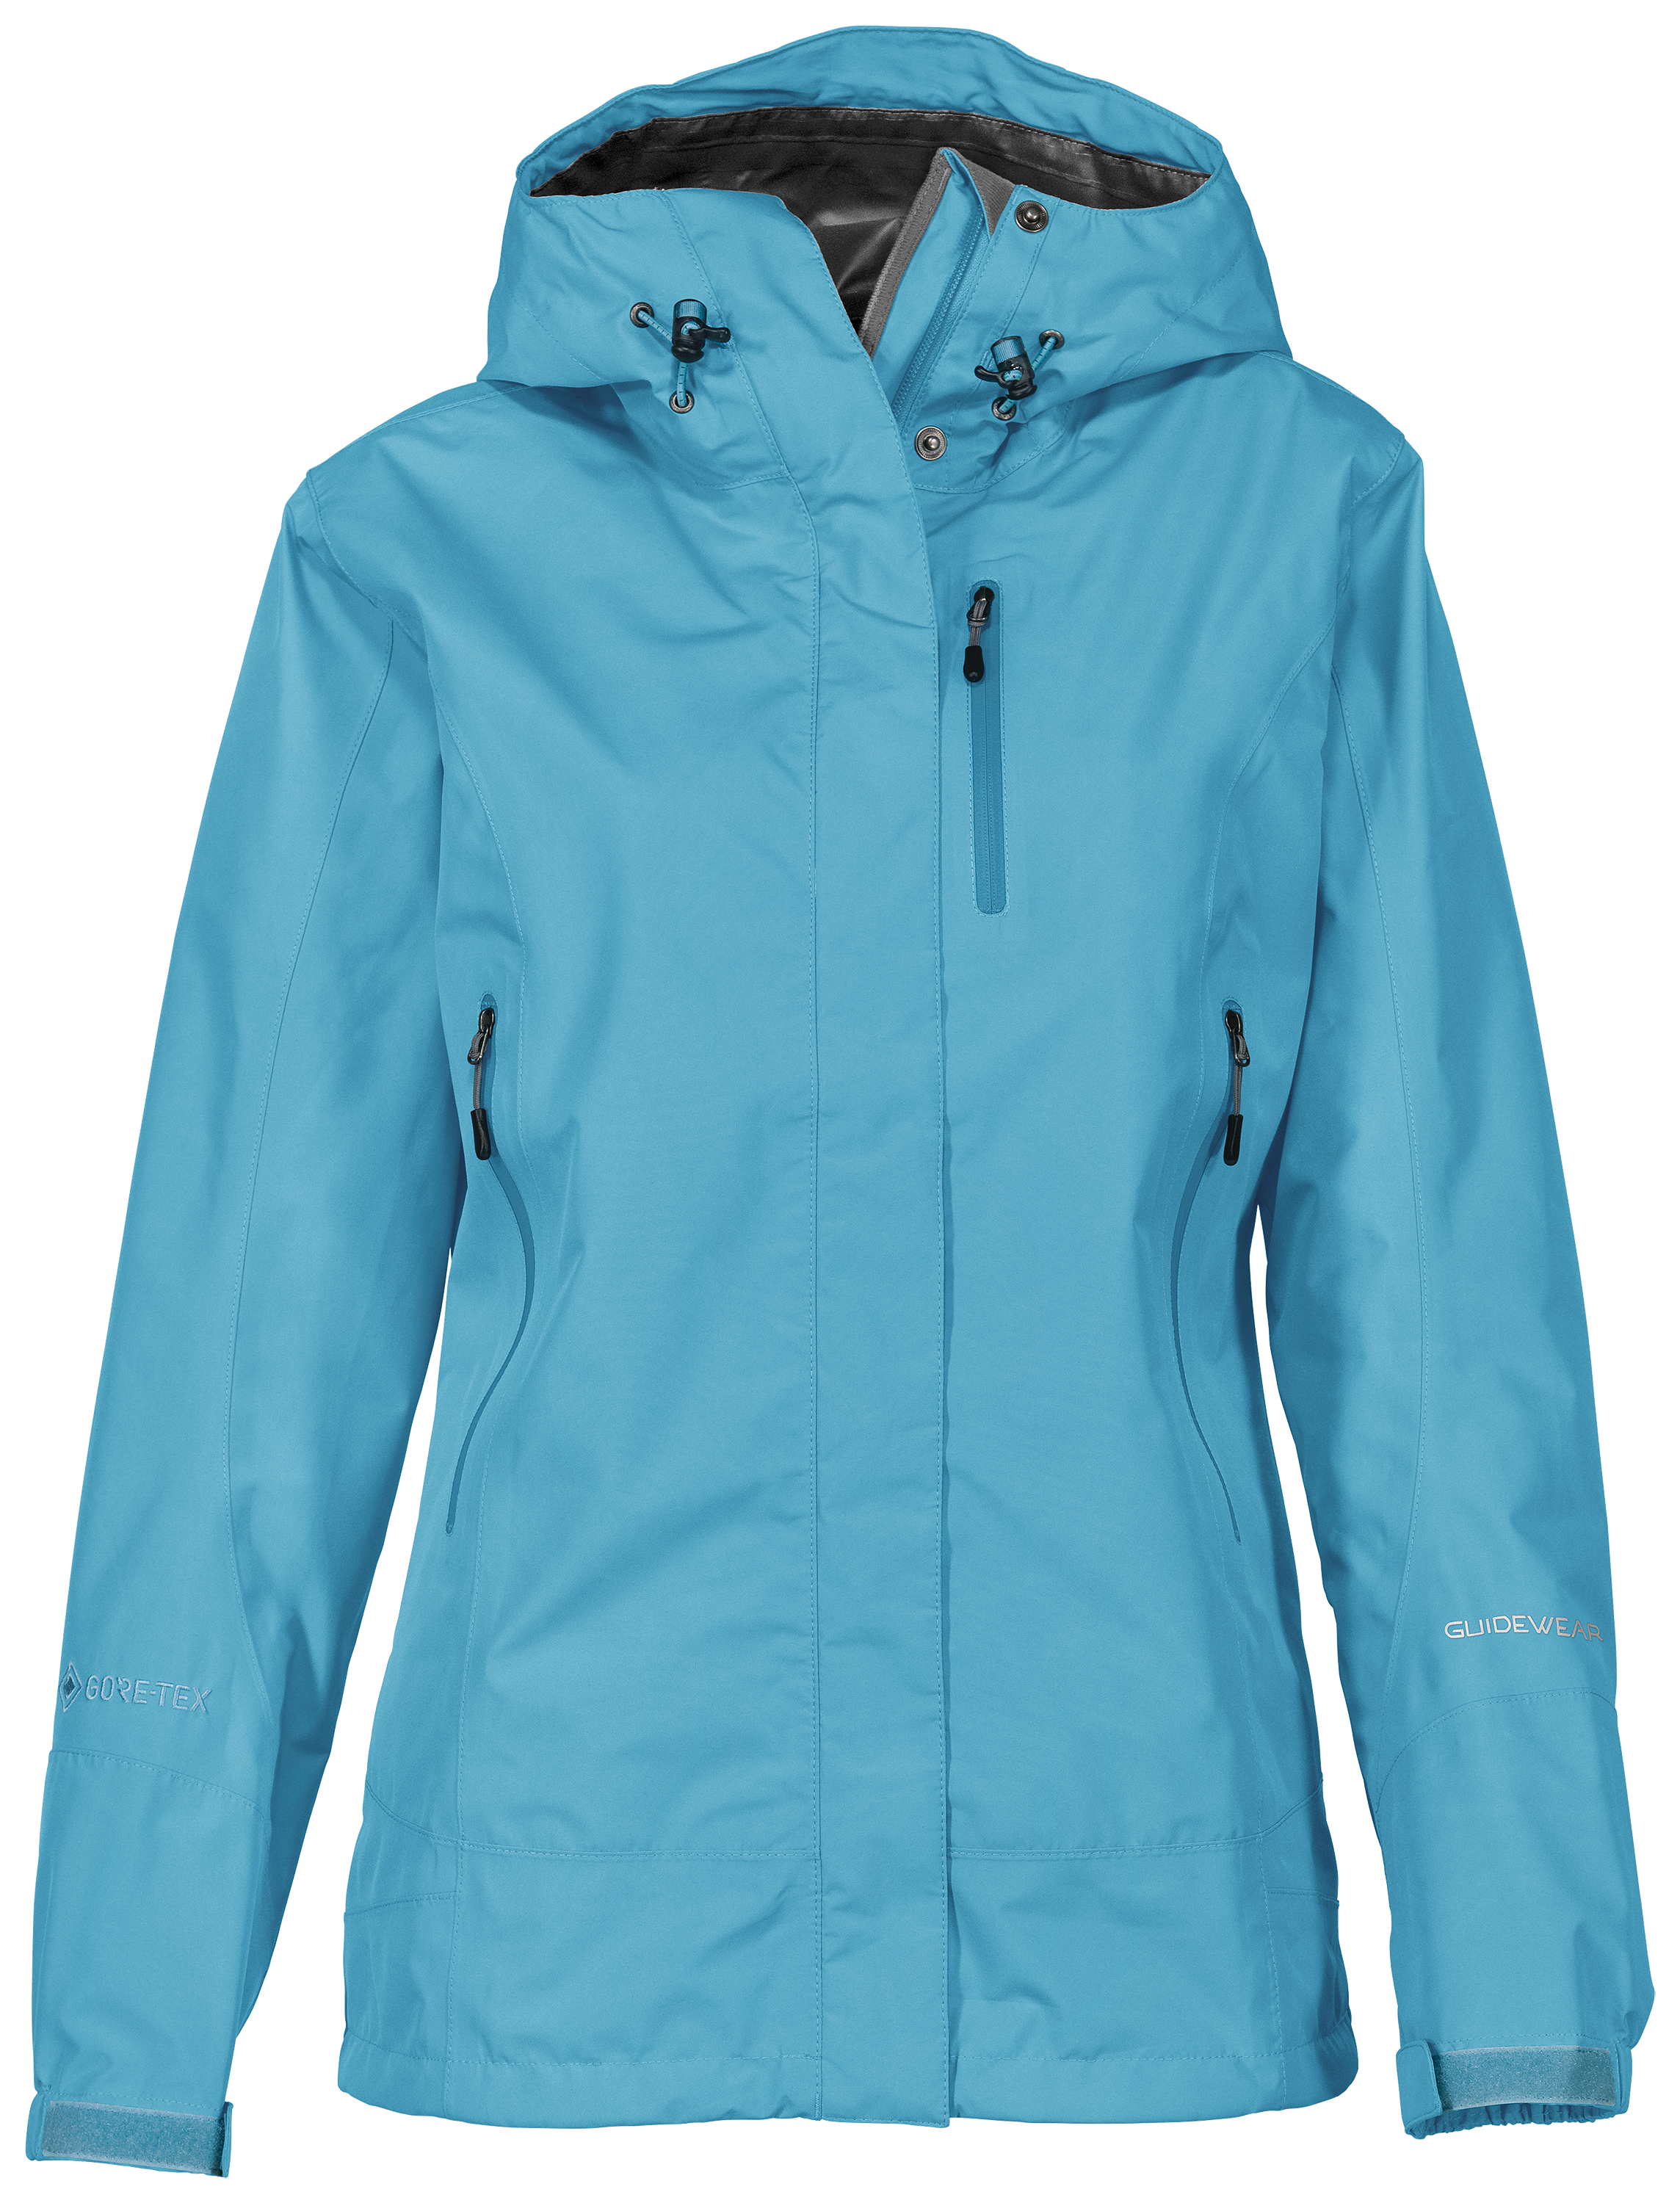 Johnny Morris Bass Pro Shops Guidewear Rainy River Jacket with GORE-TEX PacLite for Ladies - Delphinium Blue - XL